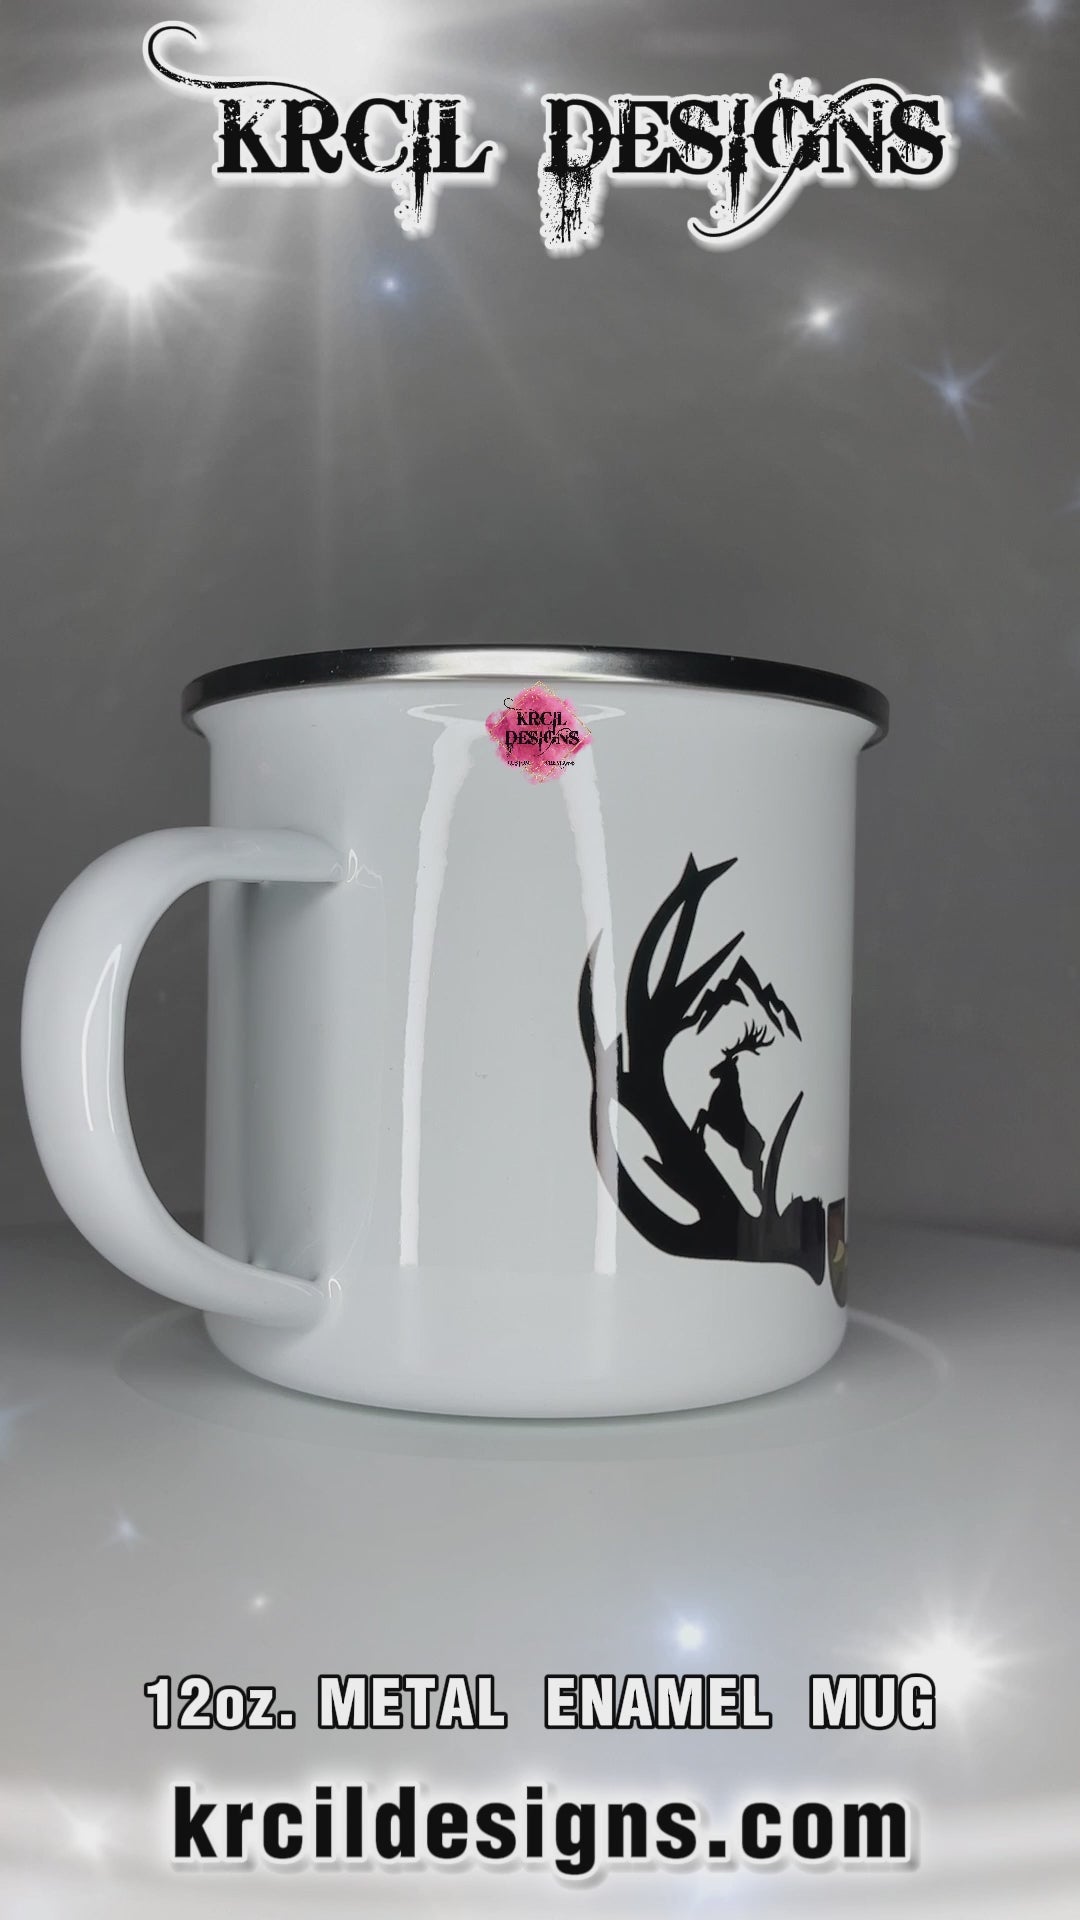 Custom Hunting Camo Coffee Mug (Personalized)